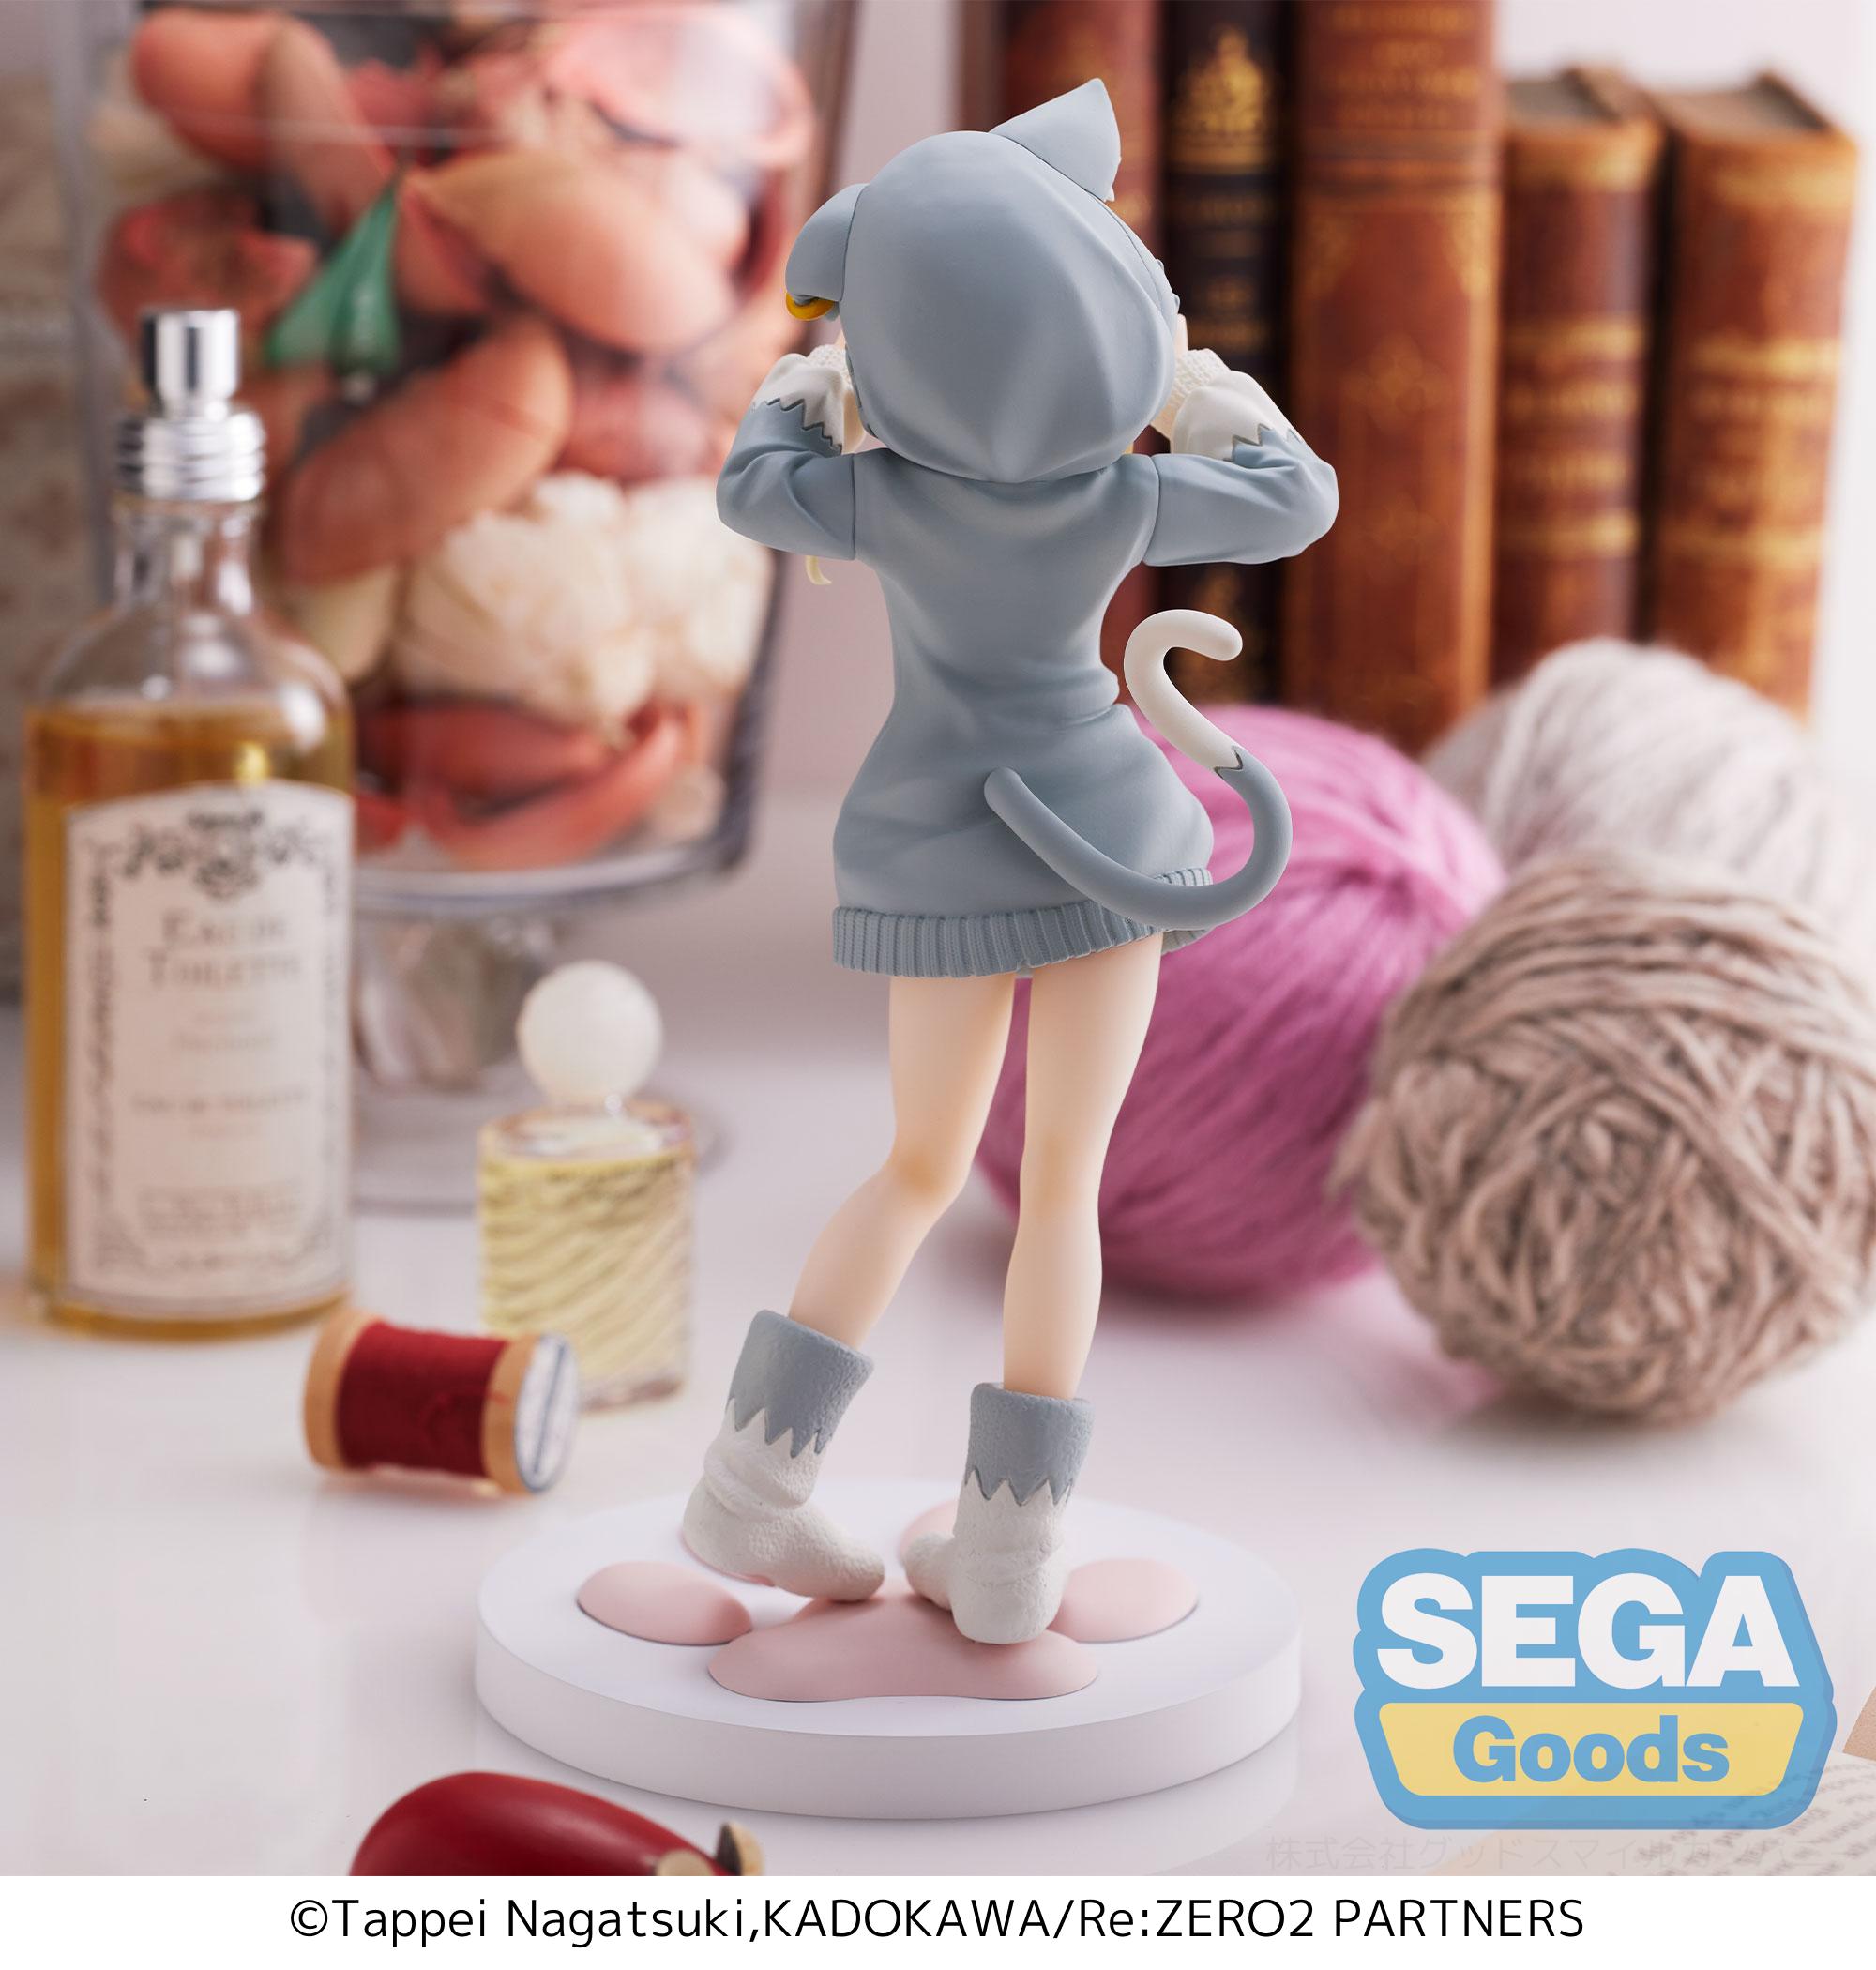 Sega Figures Luminasta: Re Zero Starting Life In Another World - Beatrice The Great Spirit Pack